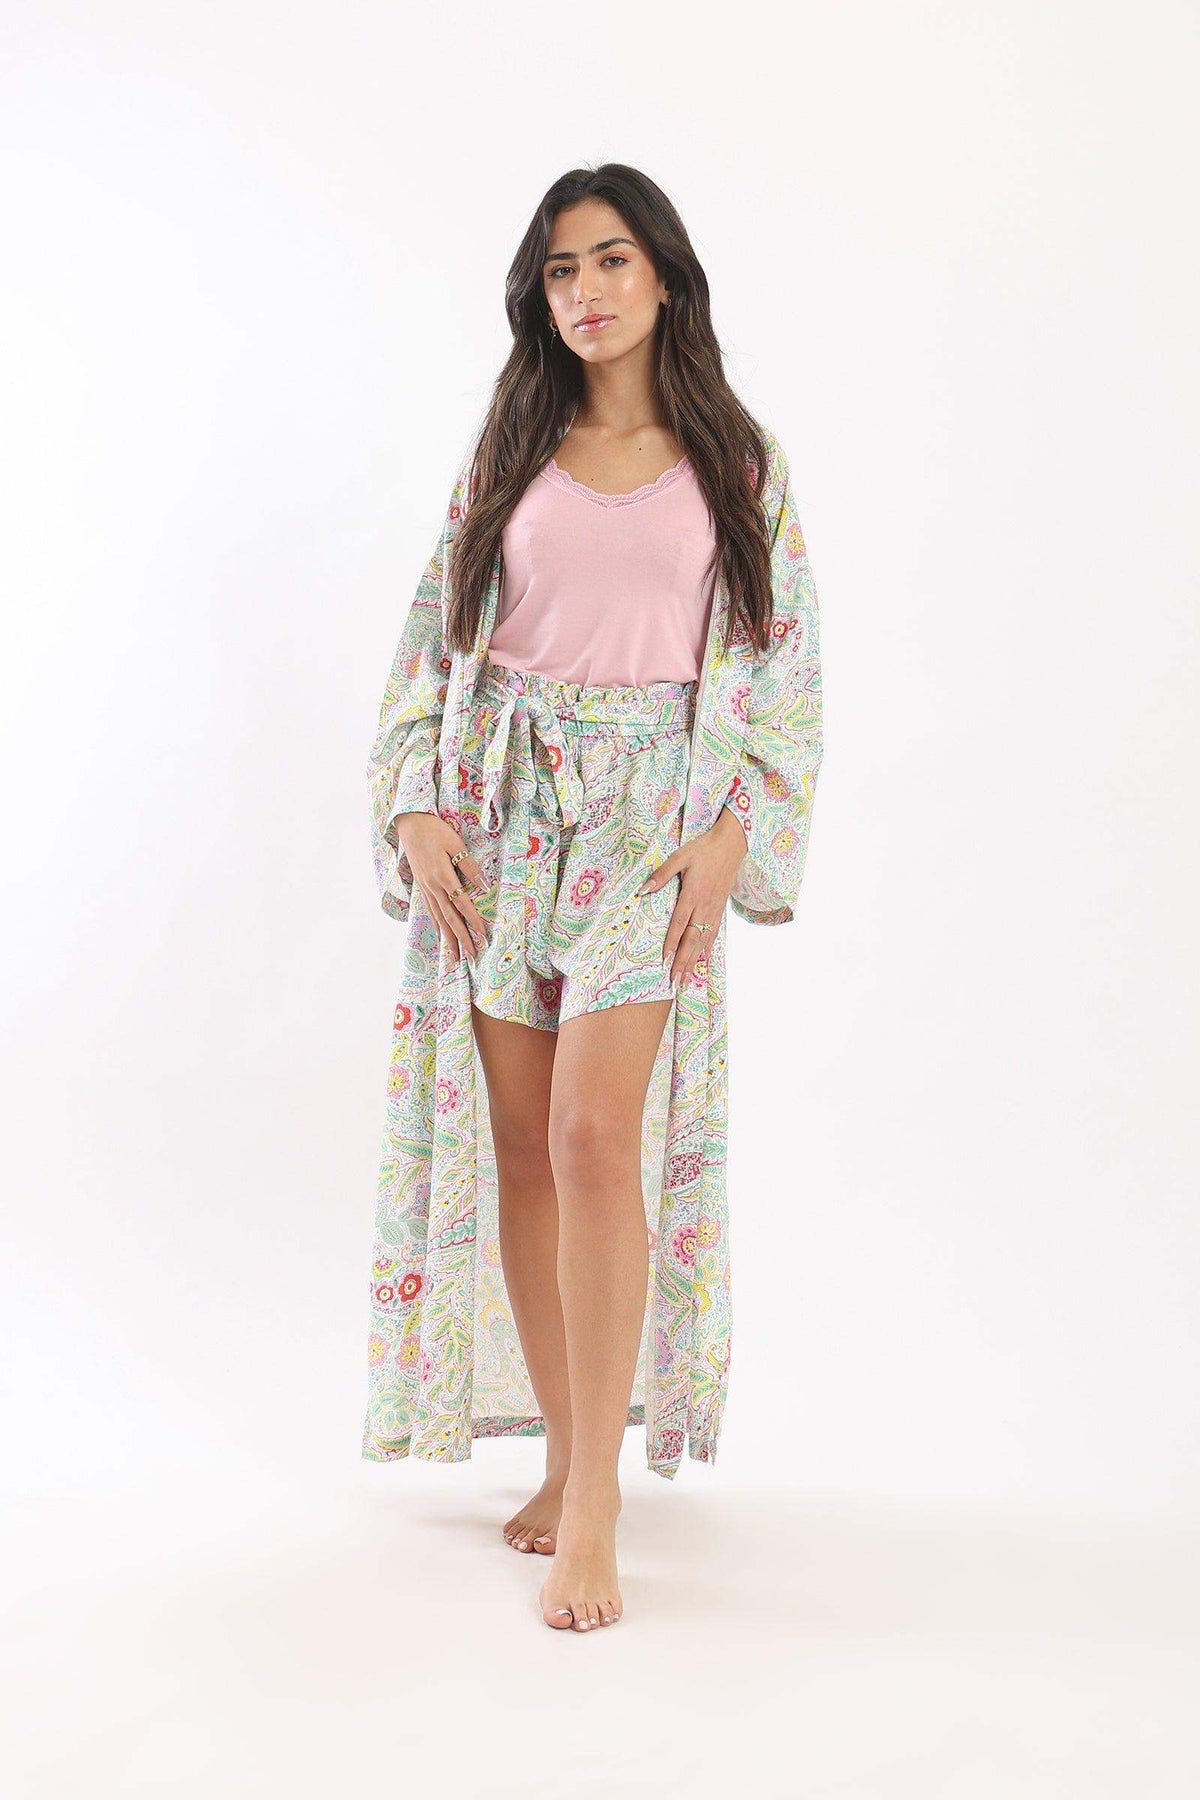 Kimono - Style Robe - Carina - كارينا